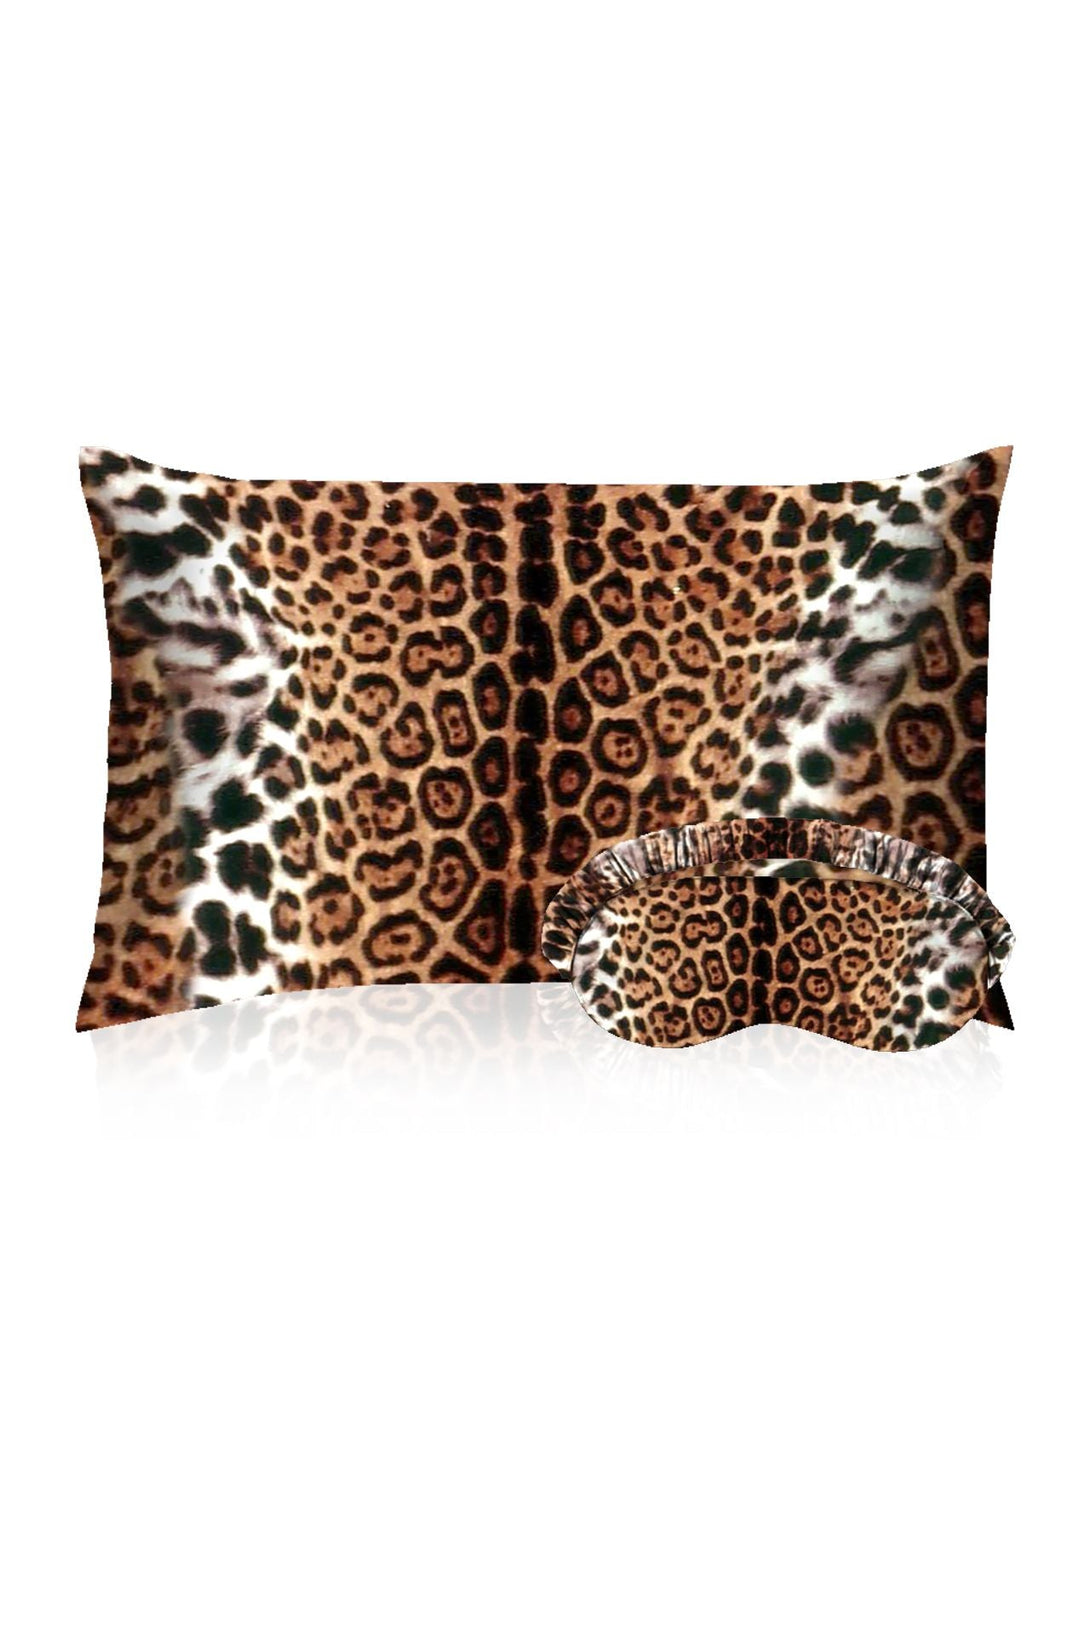 "leopard throw pillow" "Shahida Parides" "leopard pillows" "leopard print throw pillows"